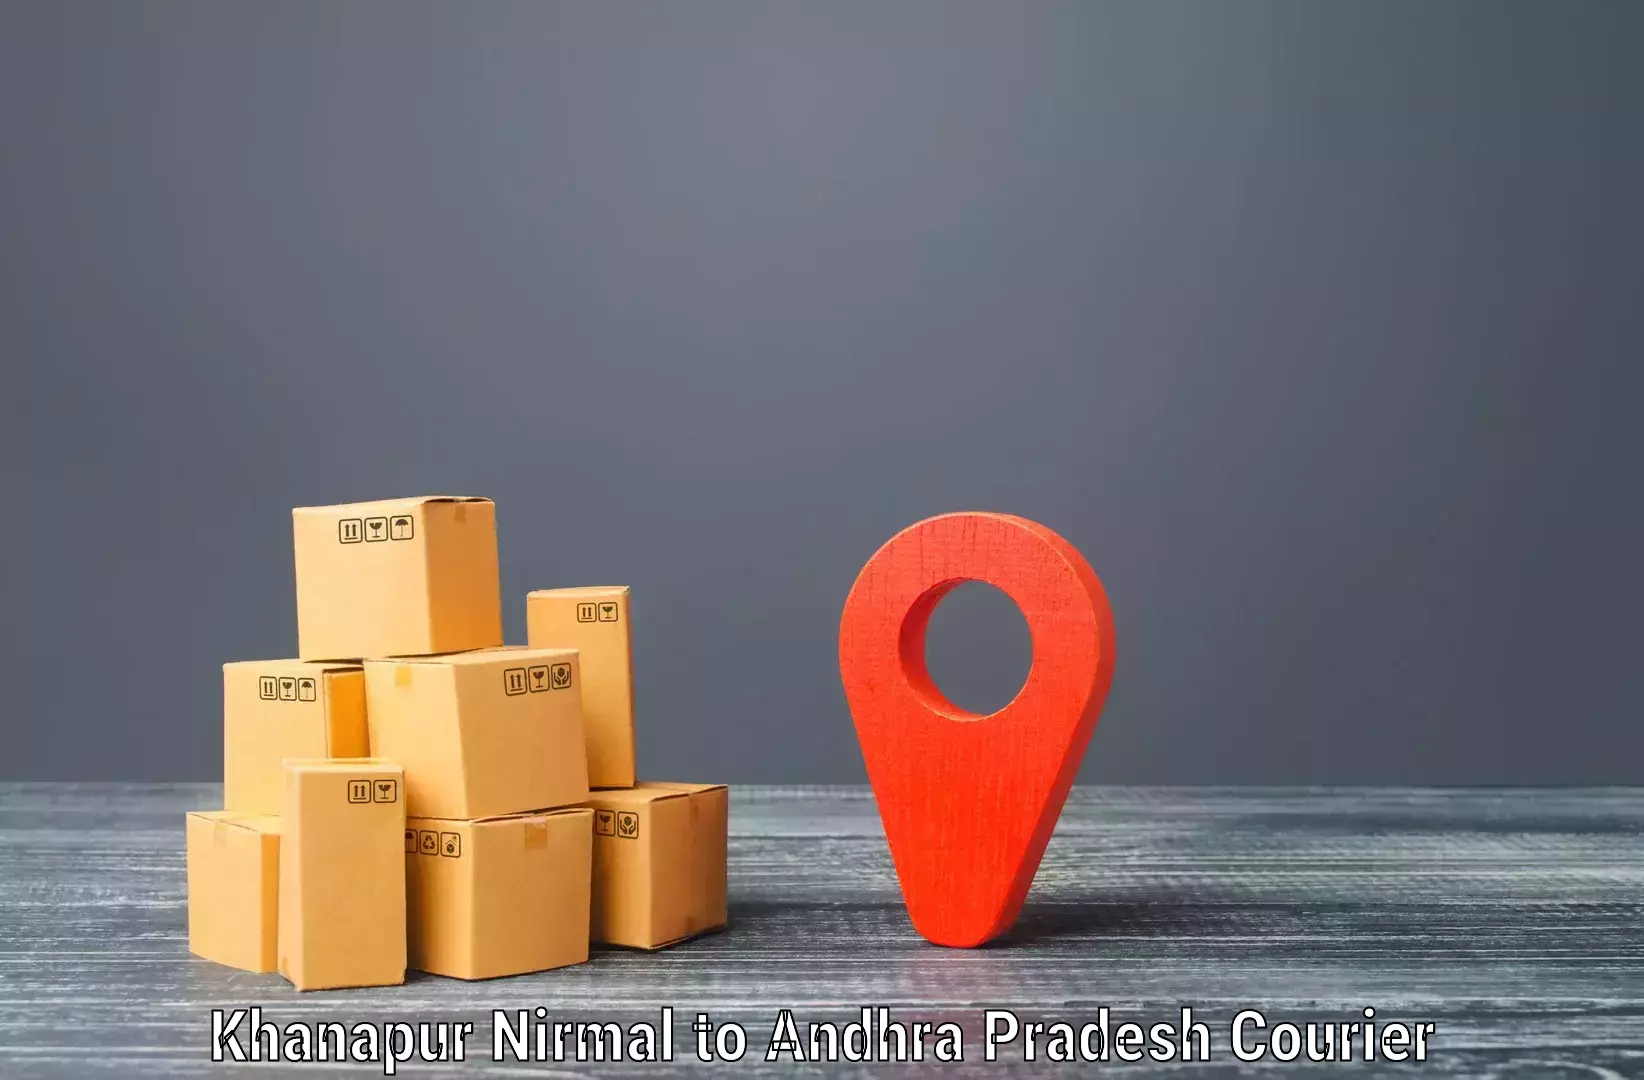 Next-generation courier services Khanapur Nirmal to Galiveedu